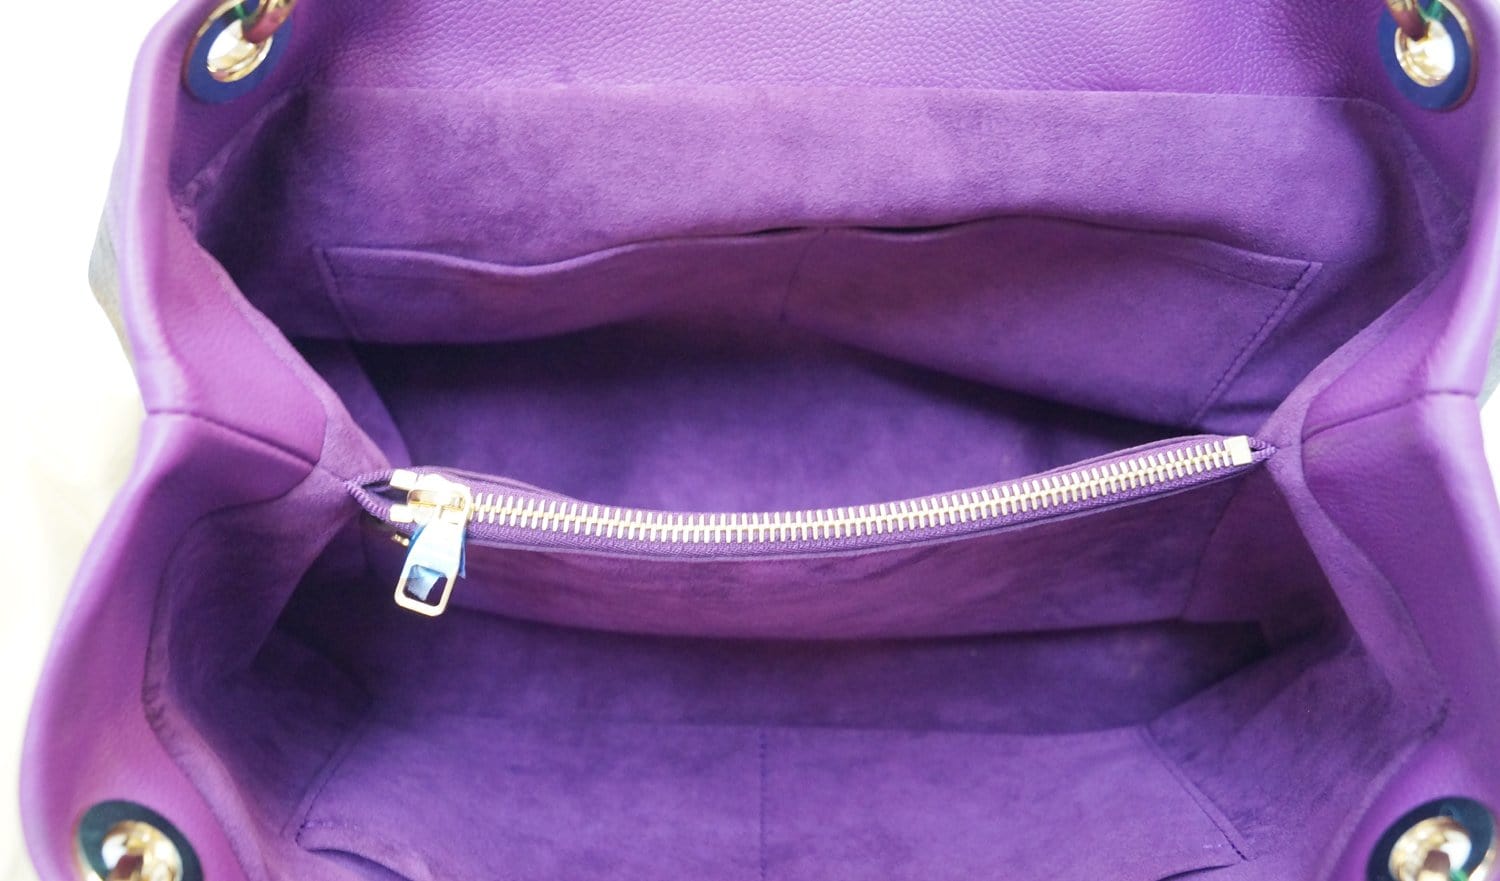 Monogram bag charm Louis Vuitton Purple in Metal - 35612697